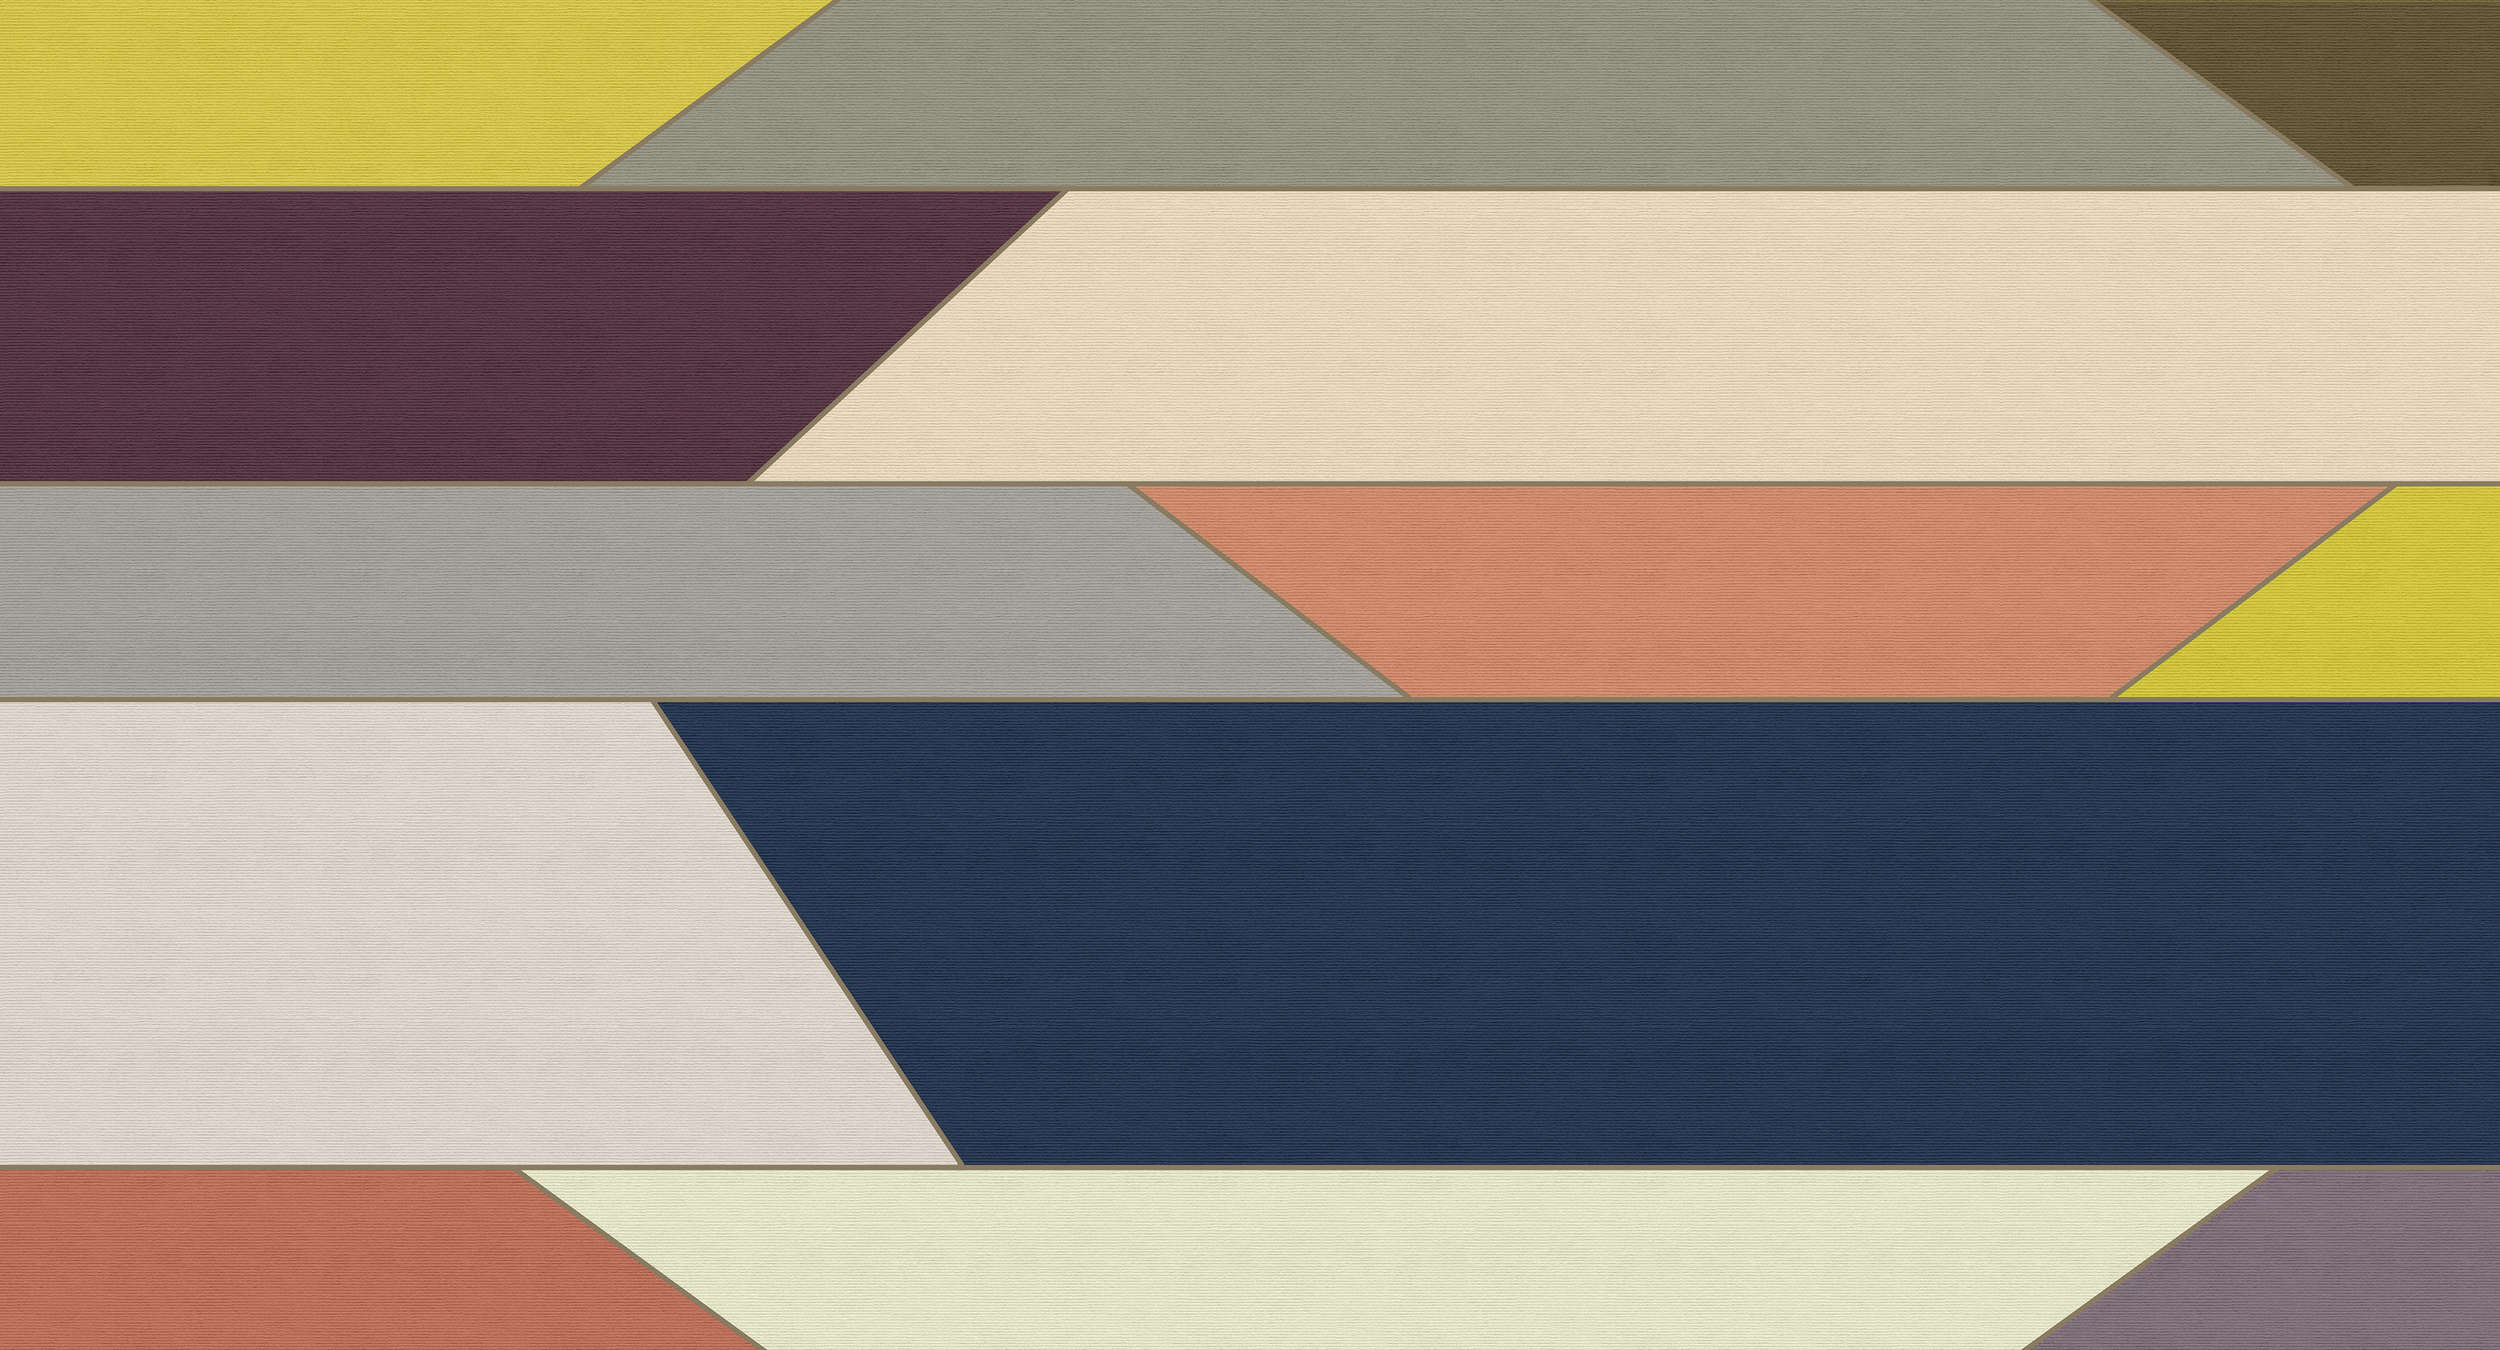             Geometry 1 - Digital behang met veelkleurig horizontaal streeppatroon - geribbelde structuur - Beige, Blauw | Pearl glad fleece
        